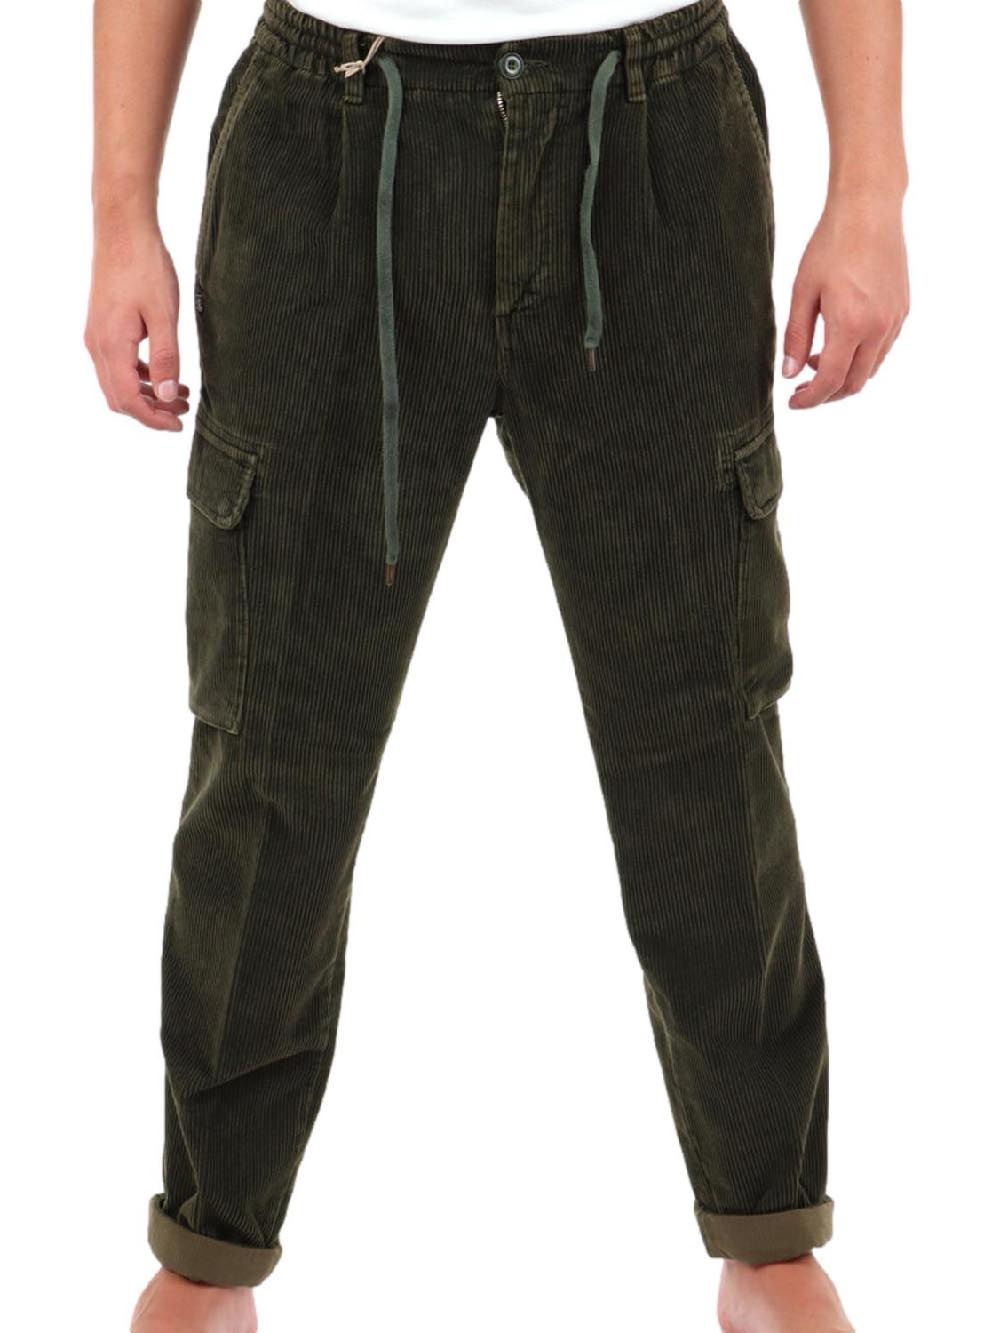 40Weft Pantalone Uomo Verde militare